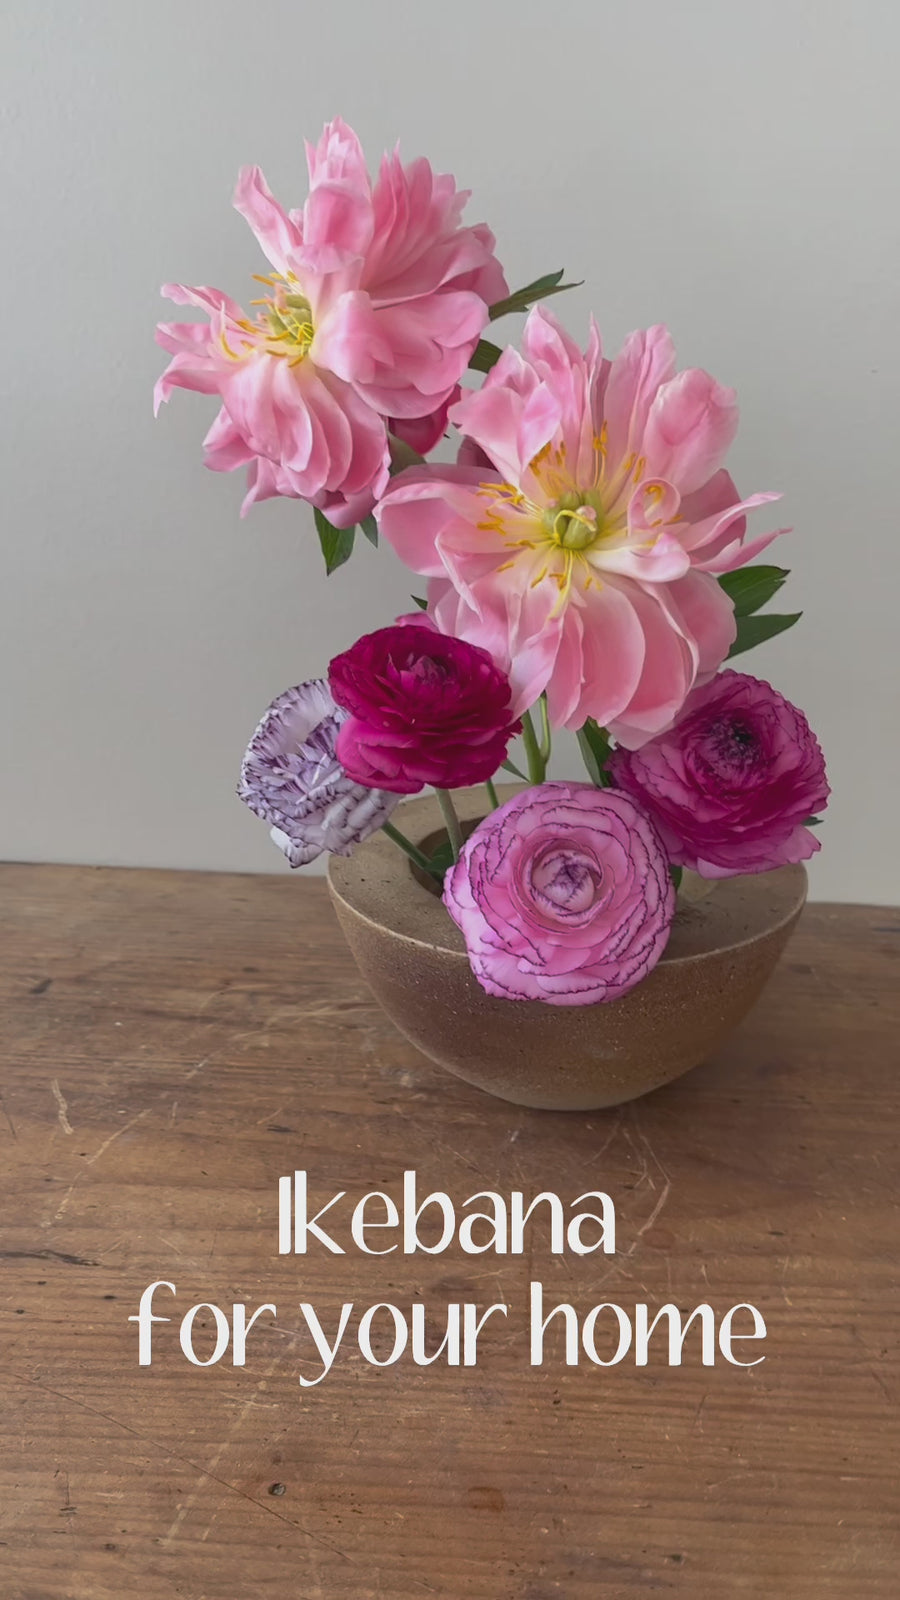 The Ikebana Stone - First Release